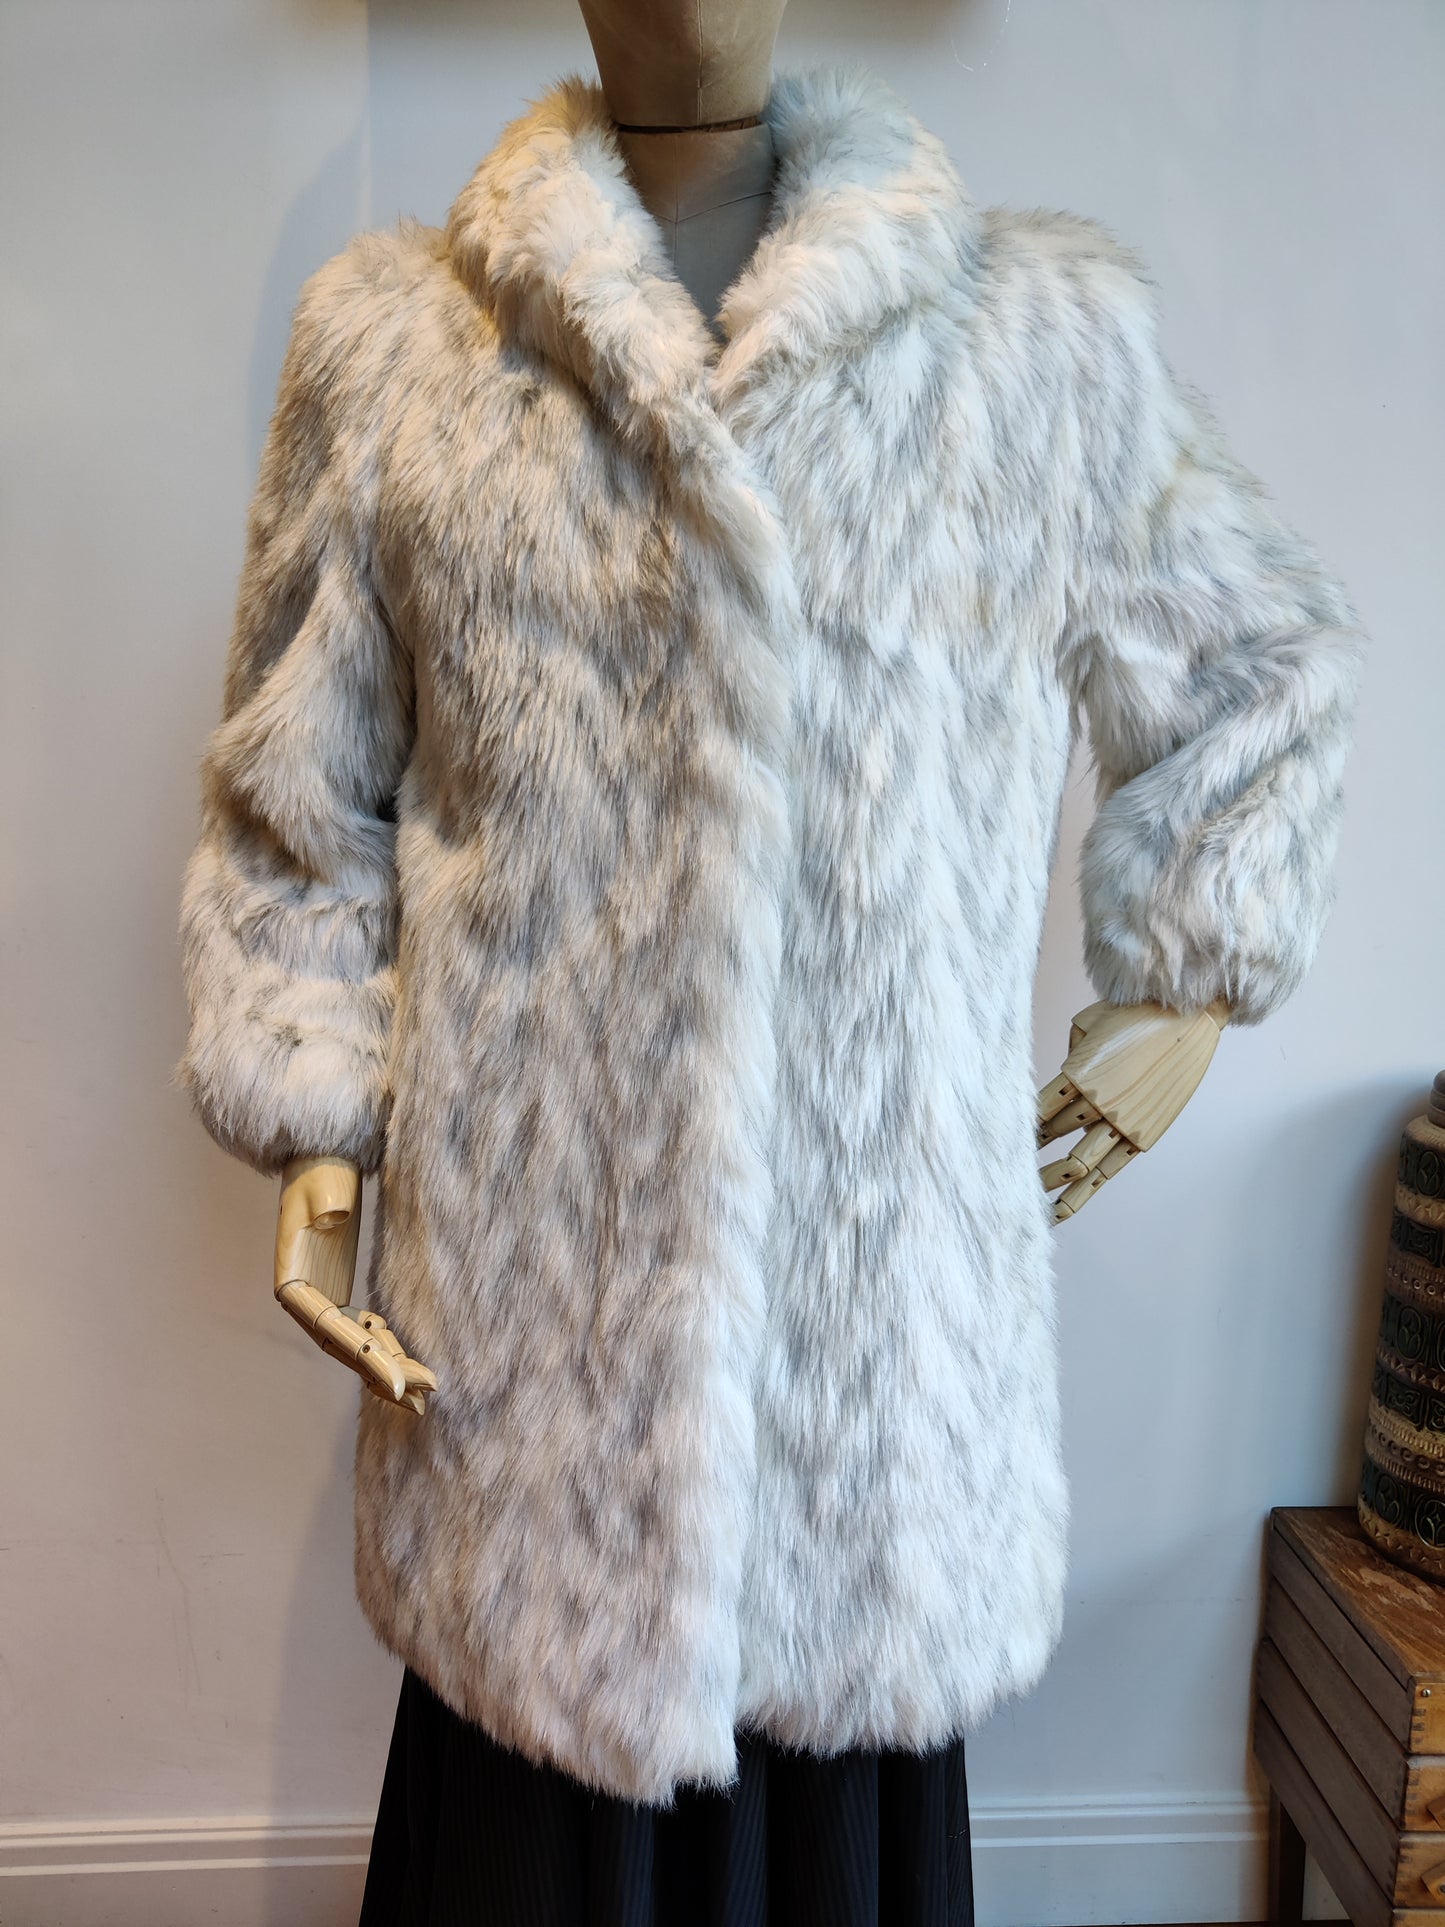 Small - Medium vintage faux fur coat